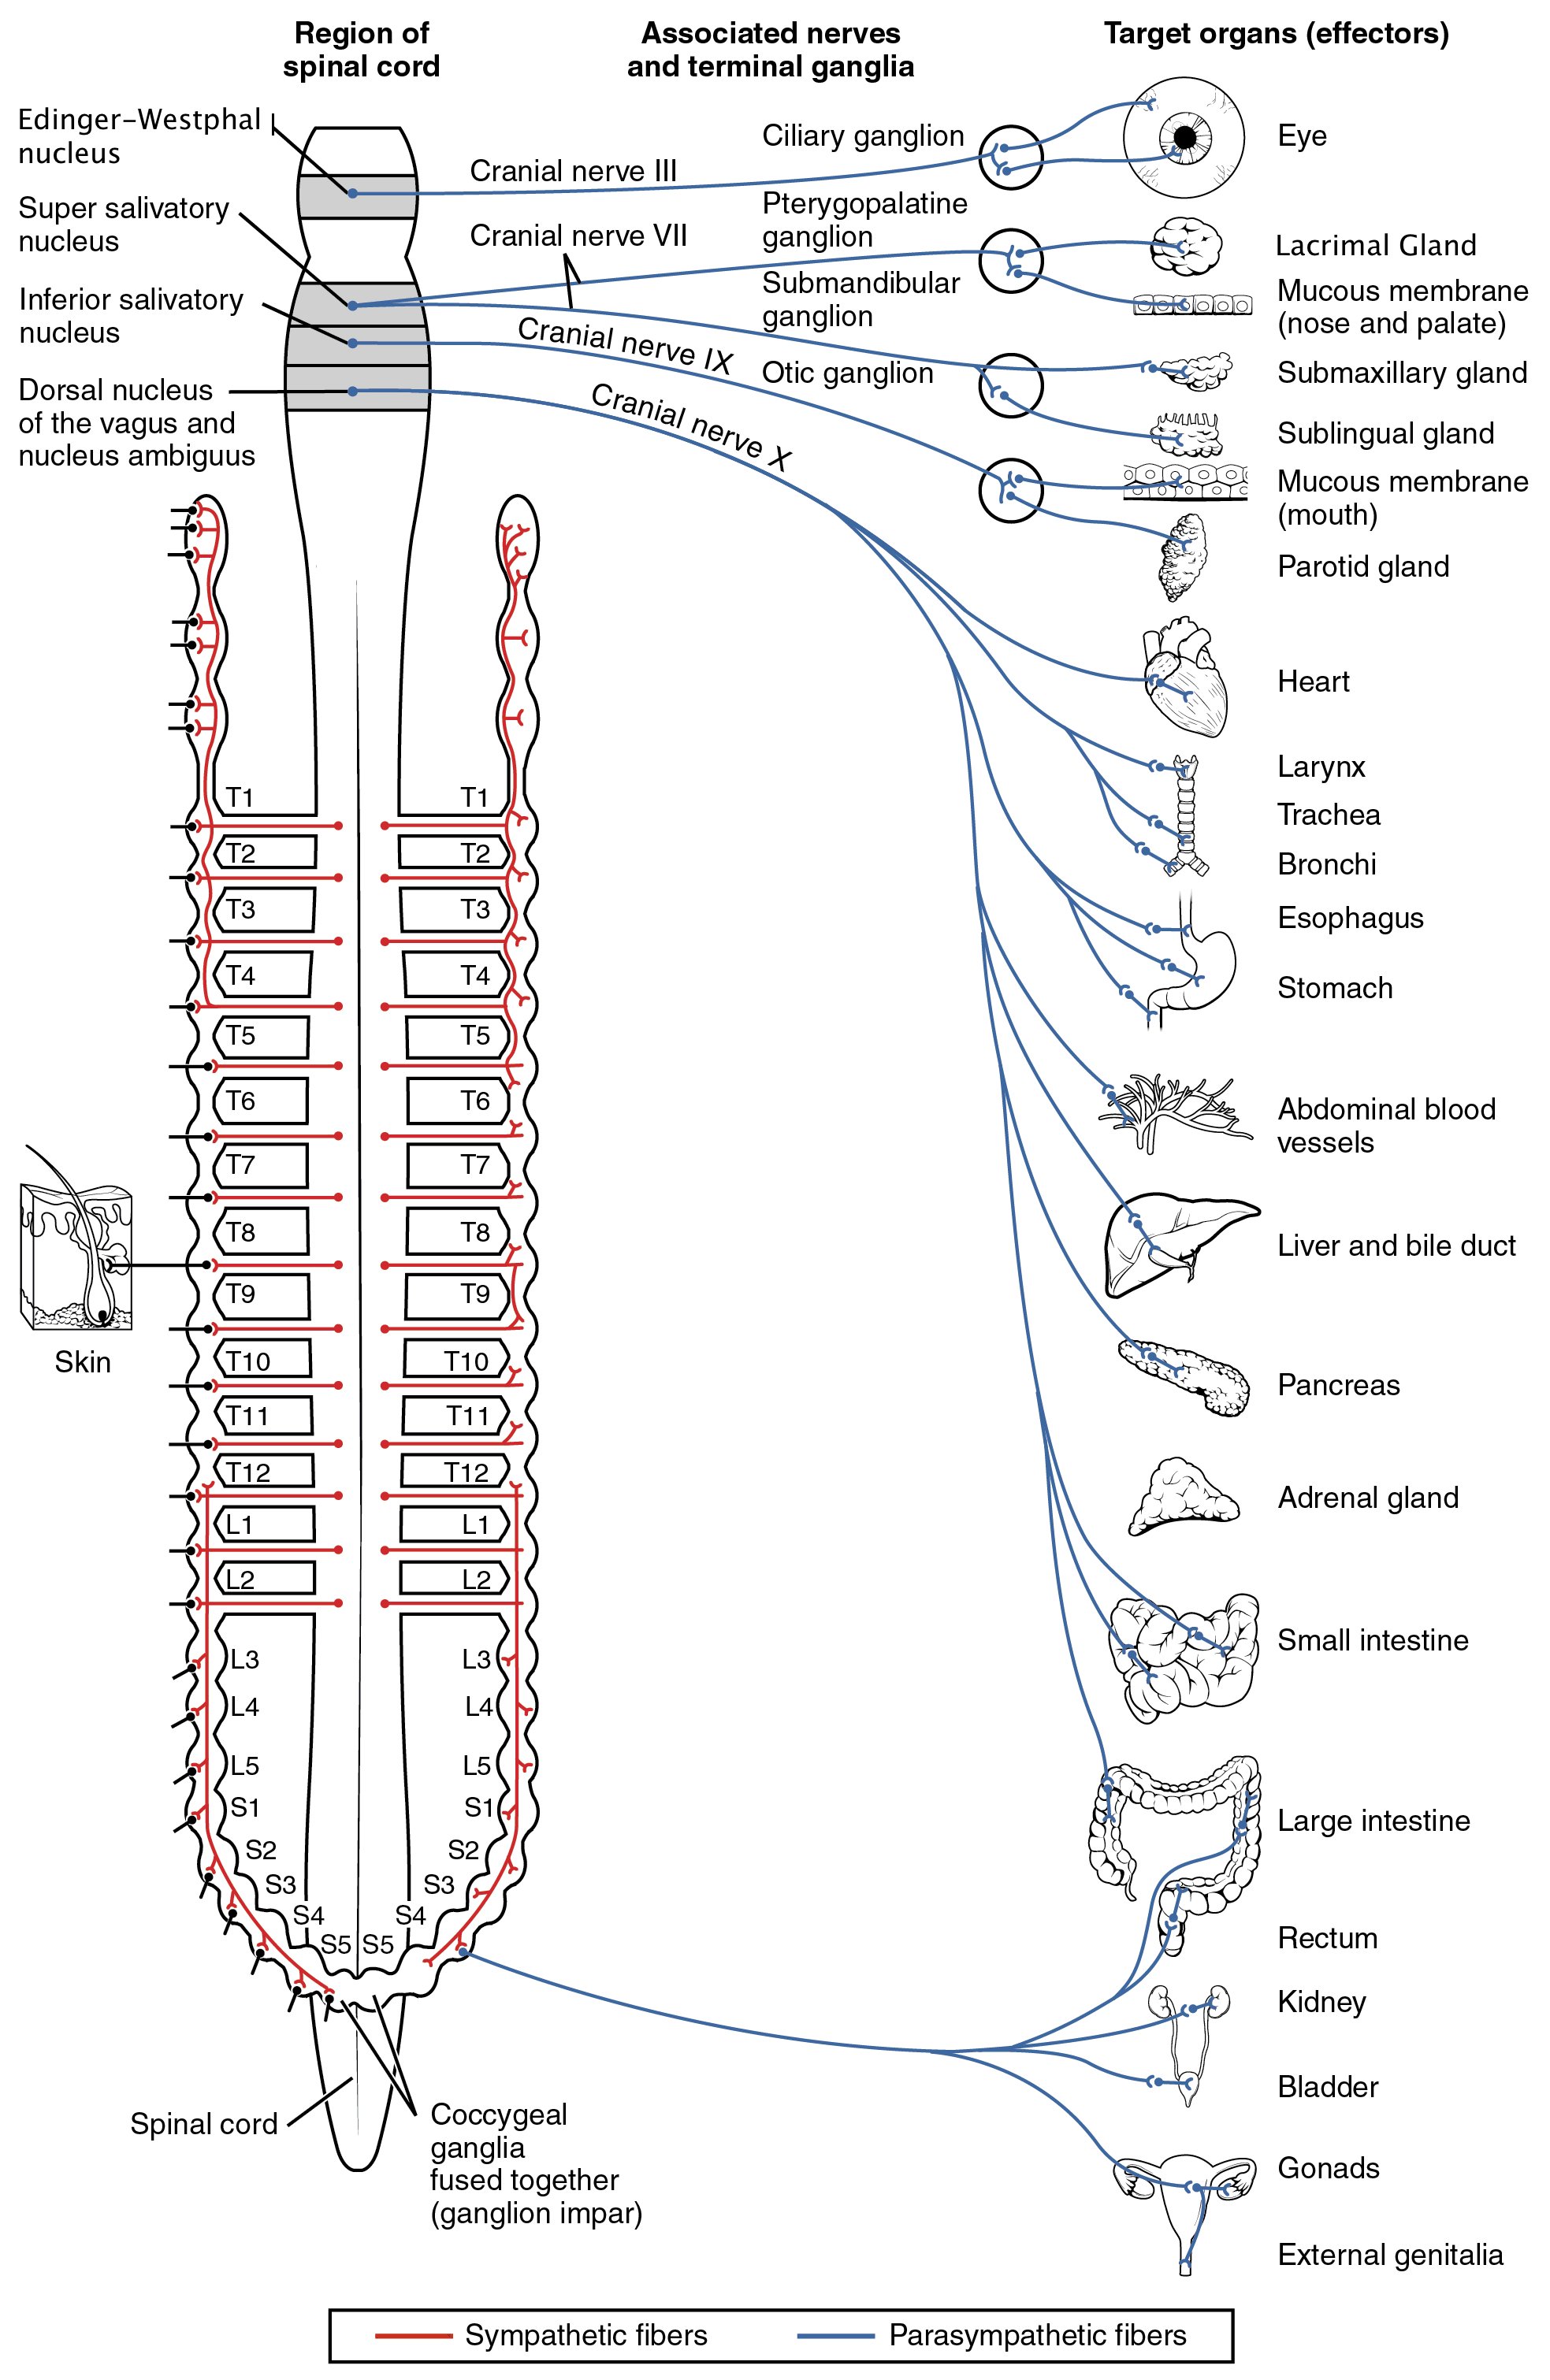 The sympathetic and parasympathetic nervous systems